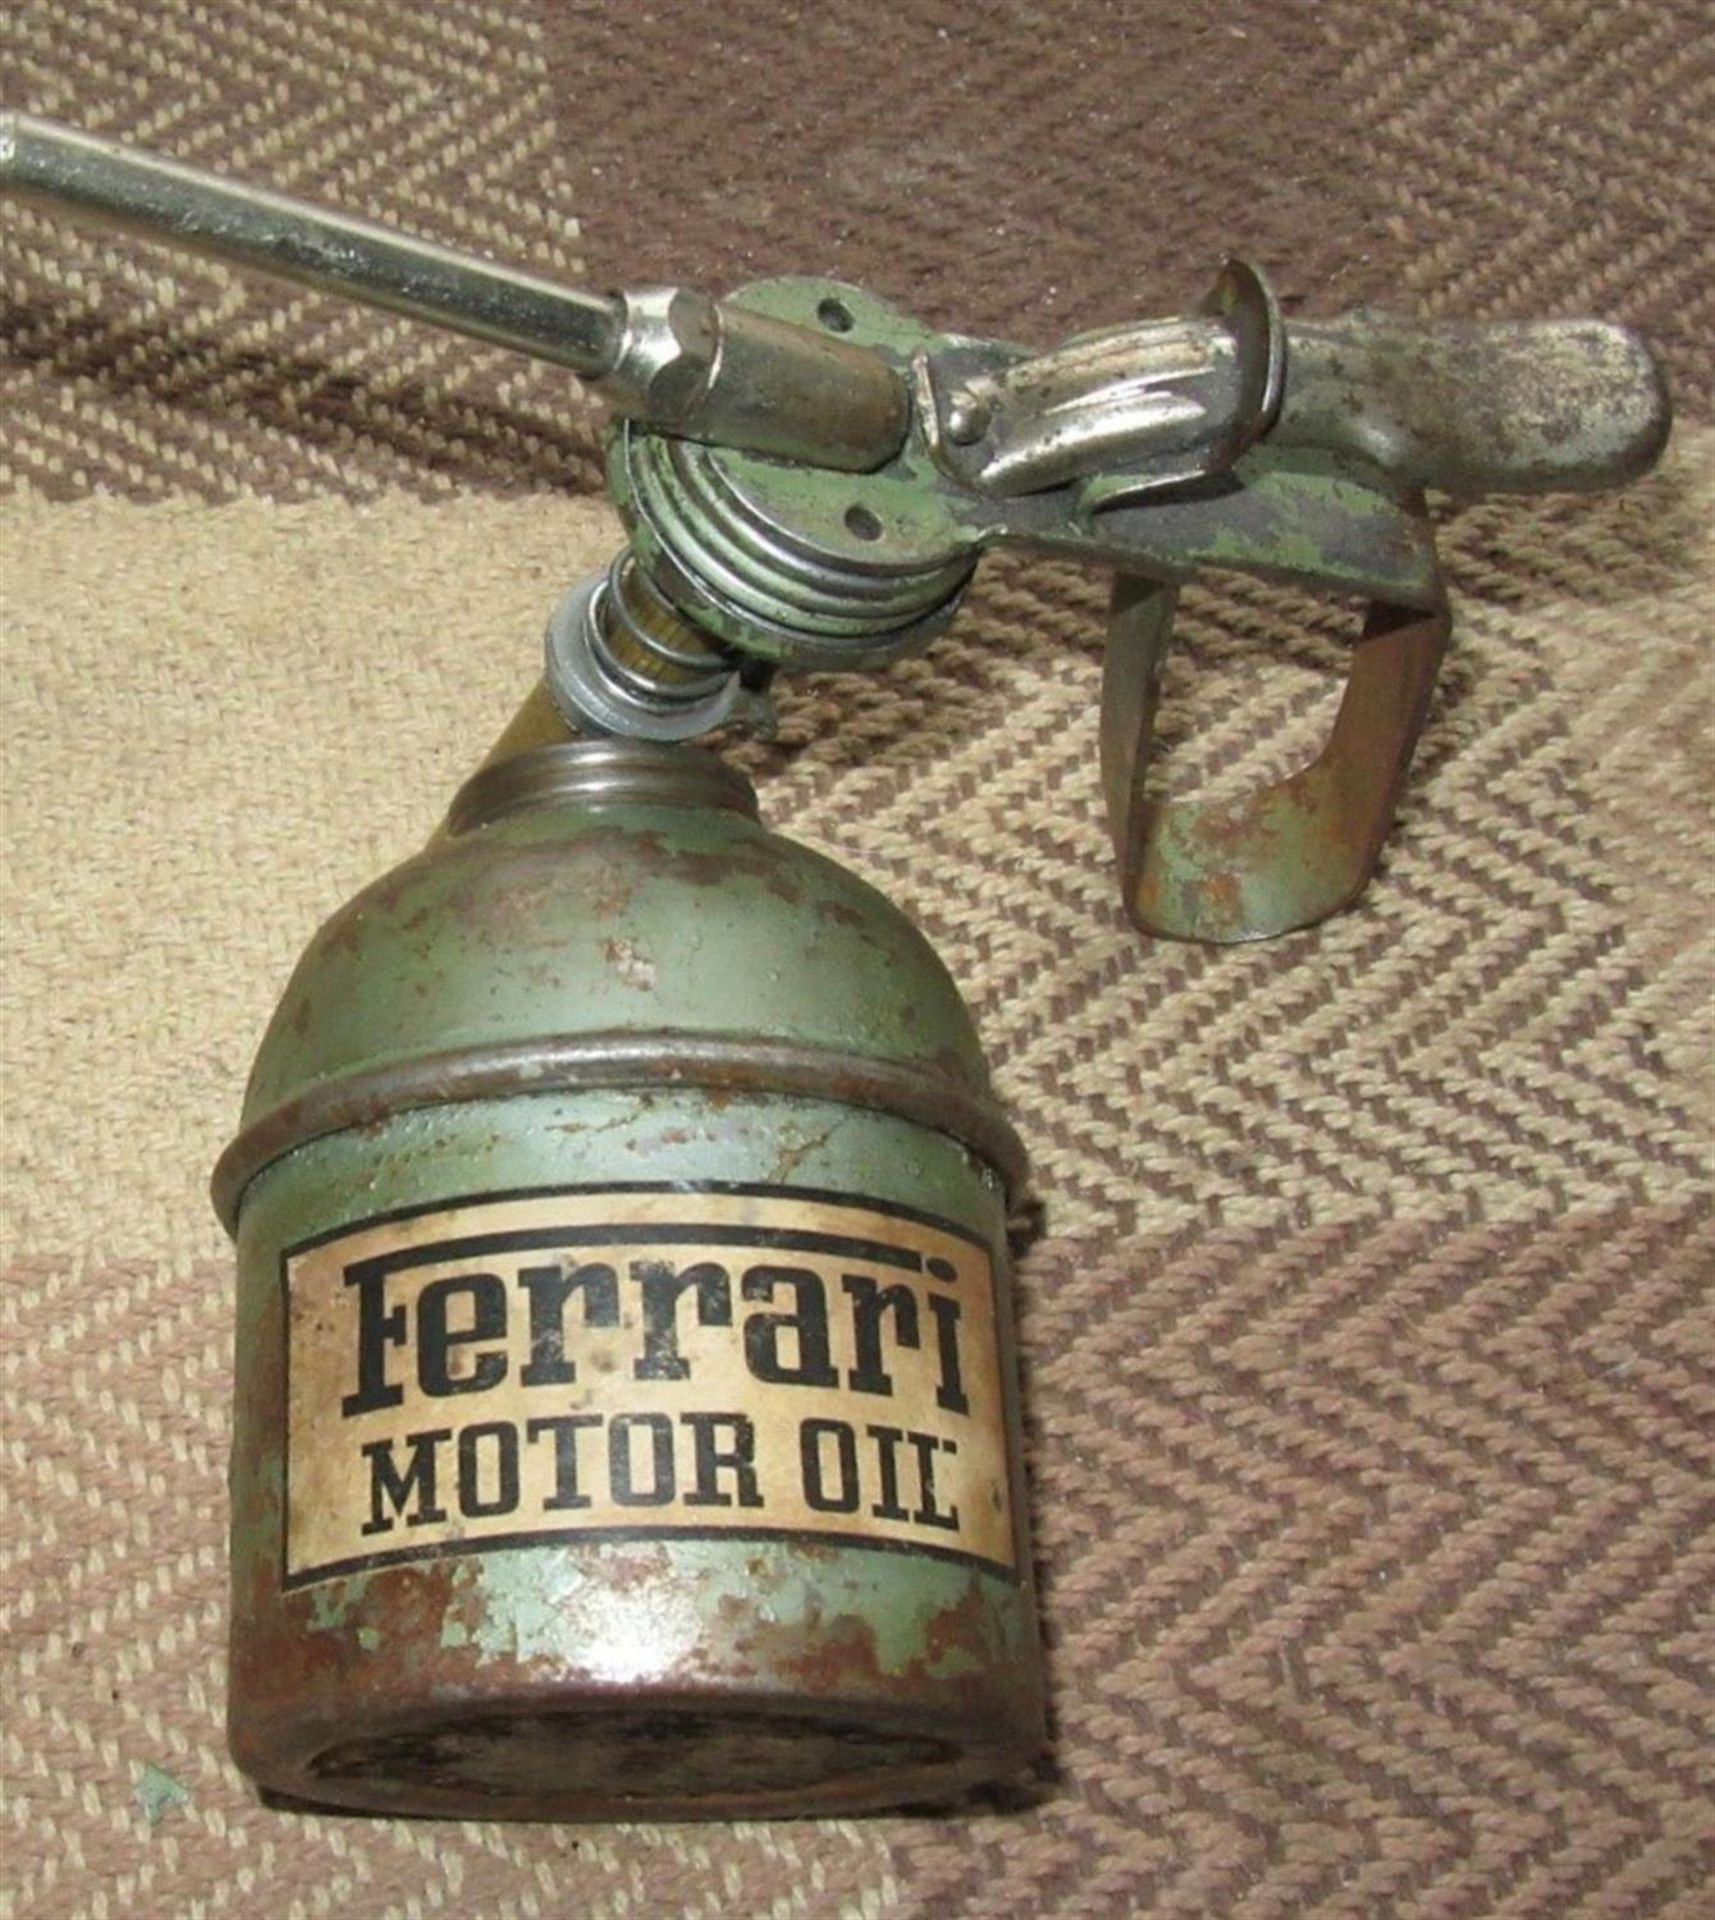 A Very Rare and Highly Sought-After Original Vintage Ferrari Oil Dispenser